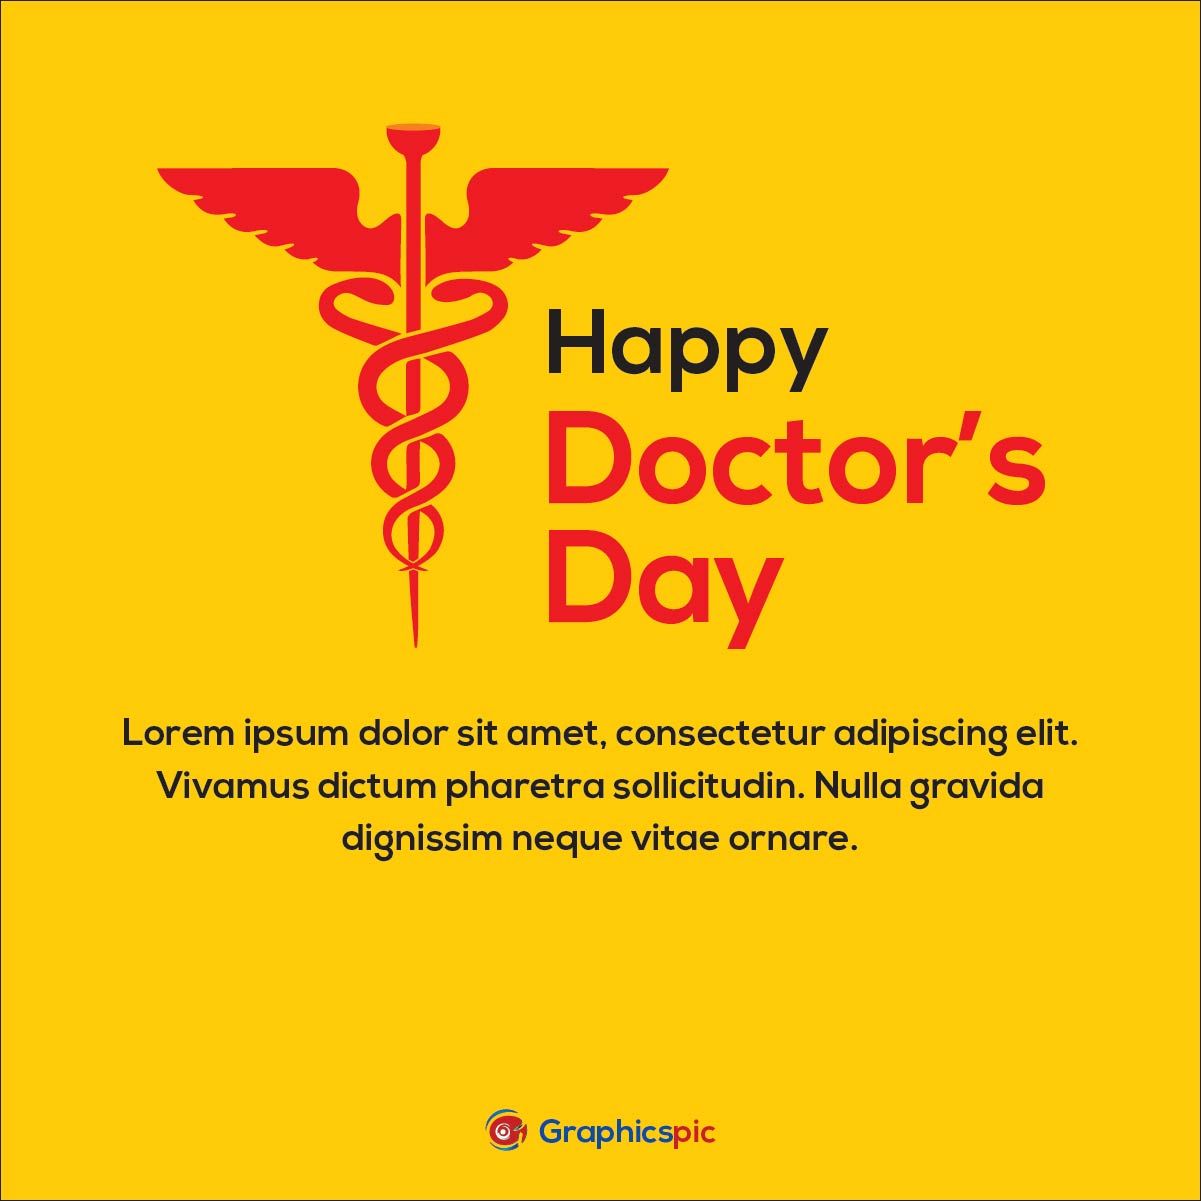 Happy doctors day with medical symbol caduceus with snakes & wings Pic. Doctors day, Happy doctors day, Medical symbols